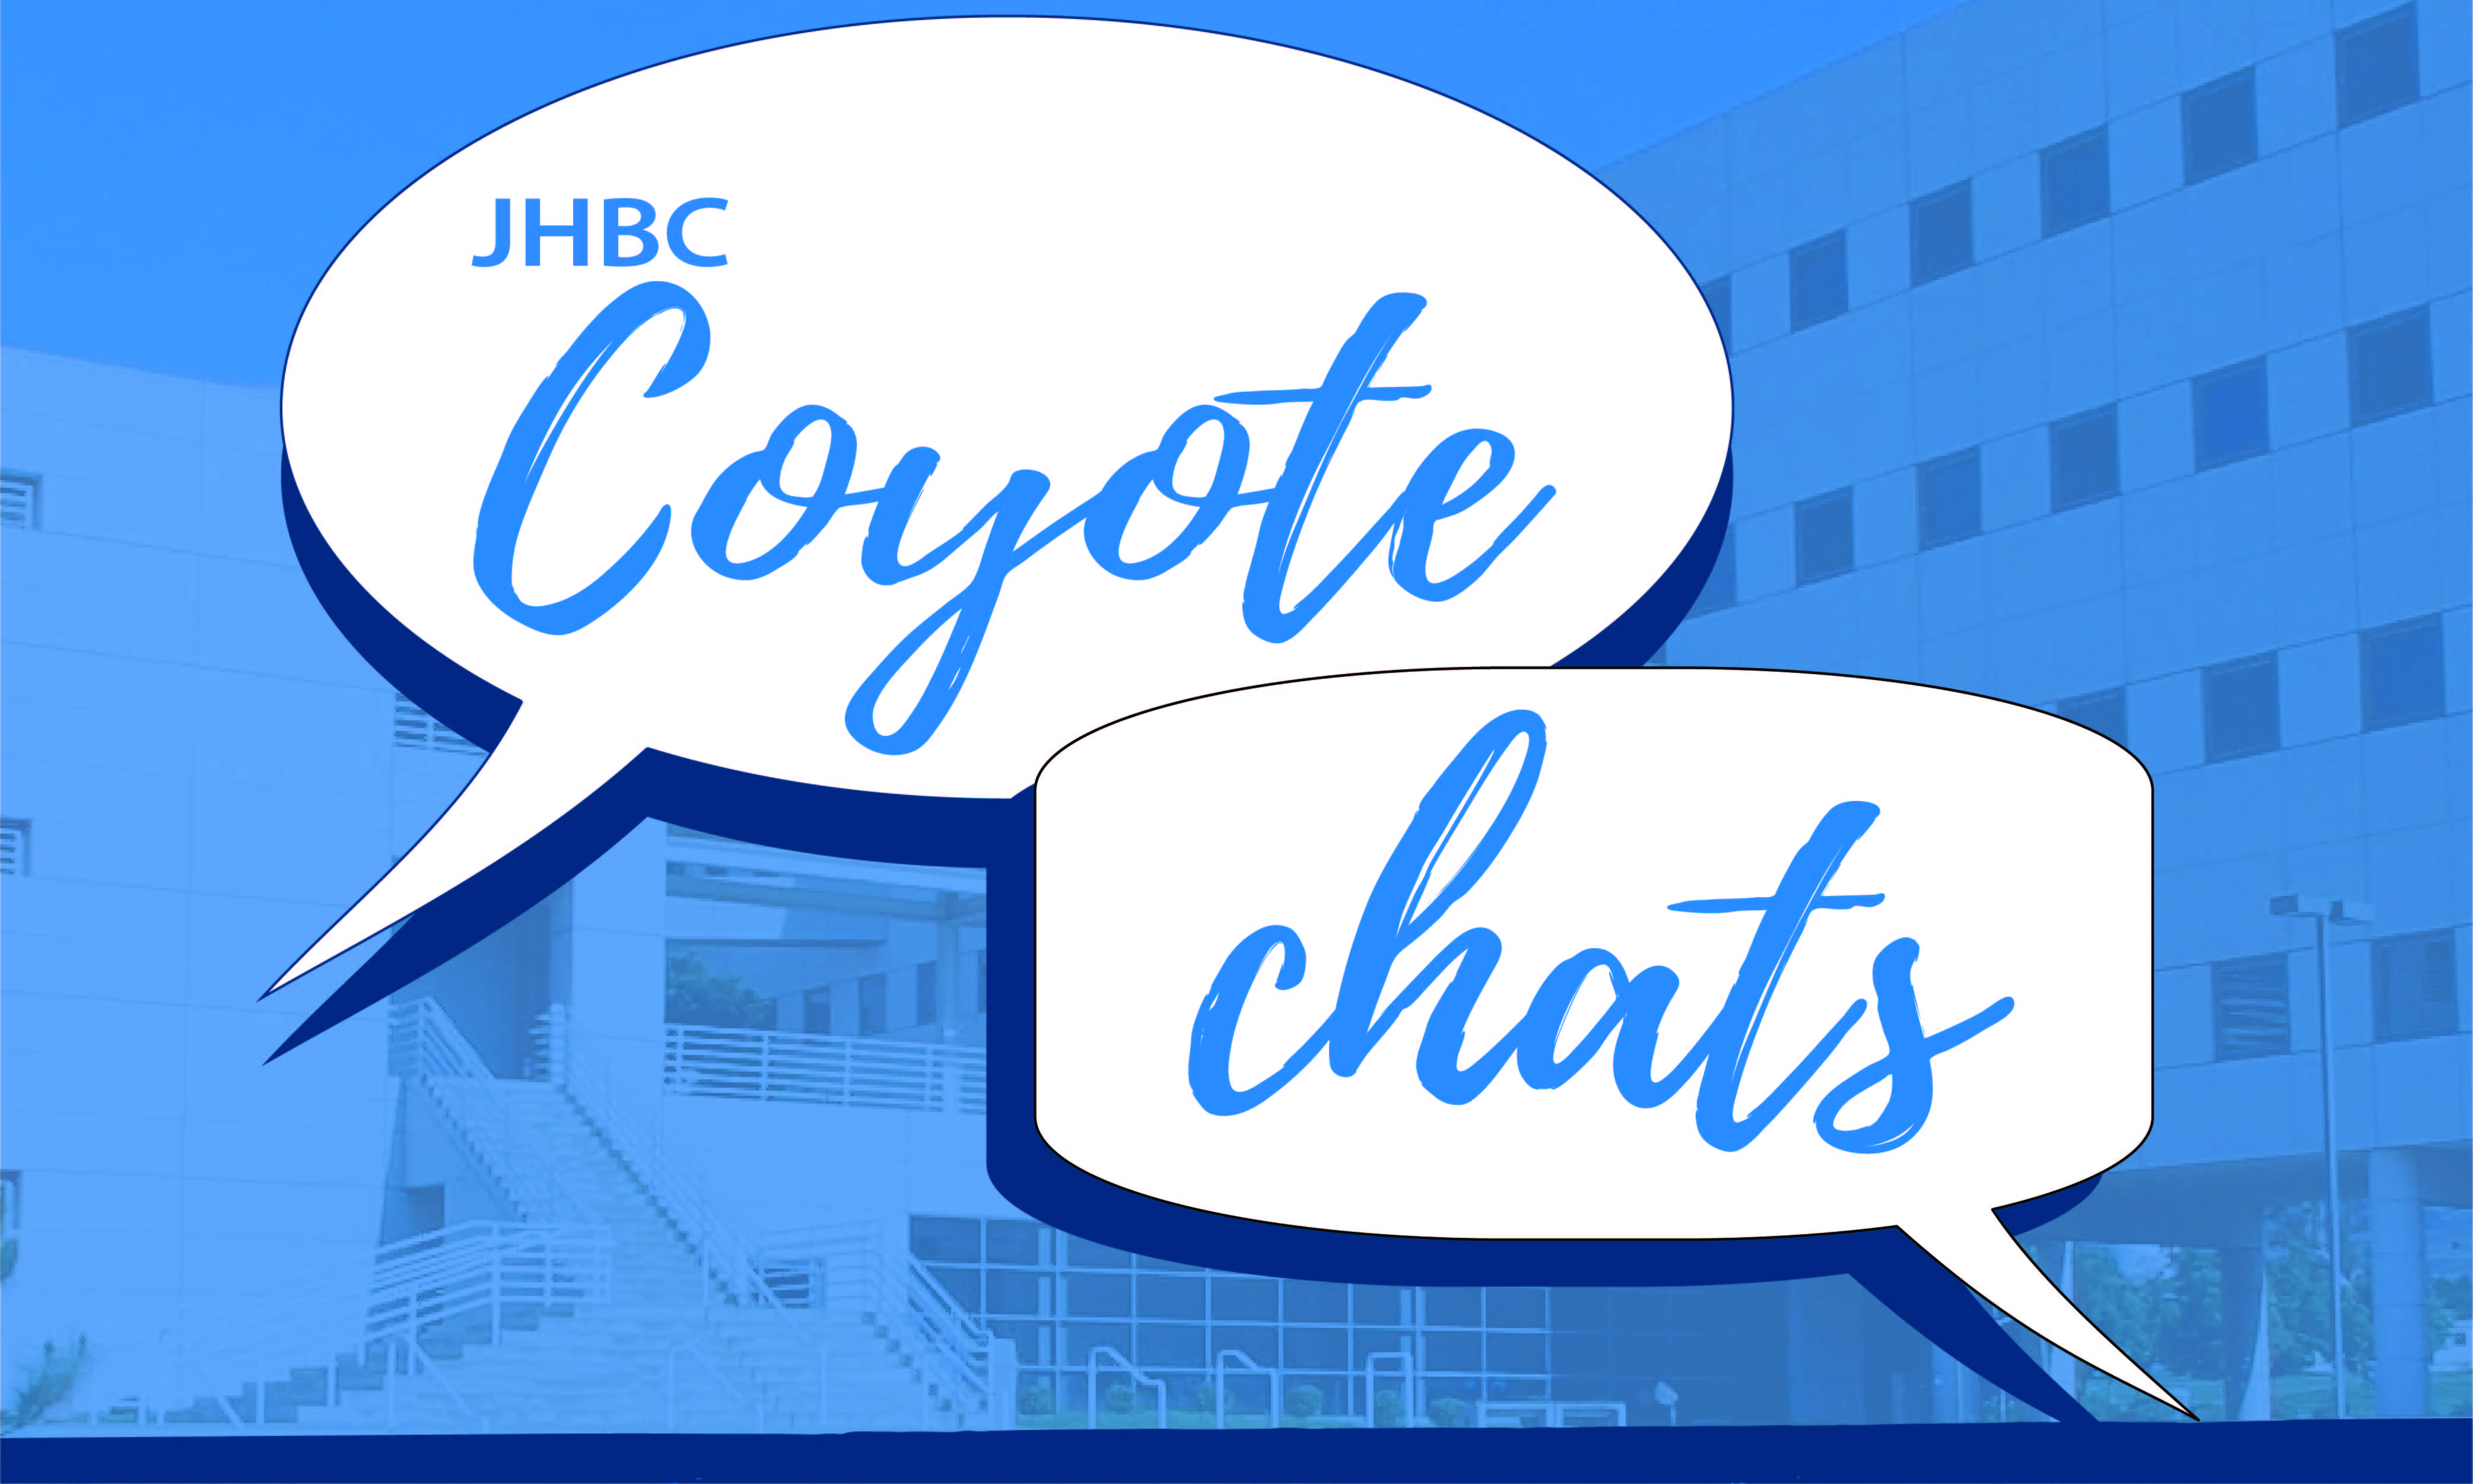 JHBC Coyote Chats